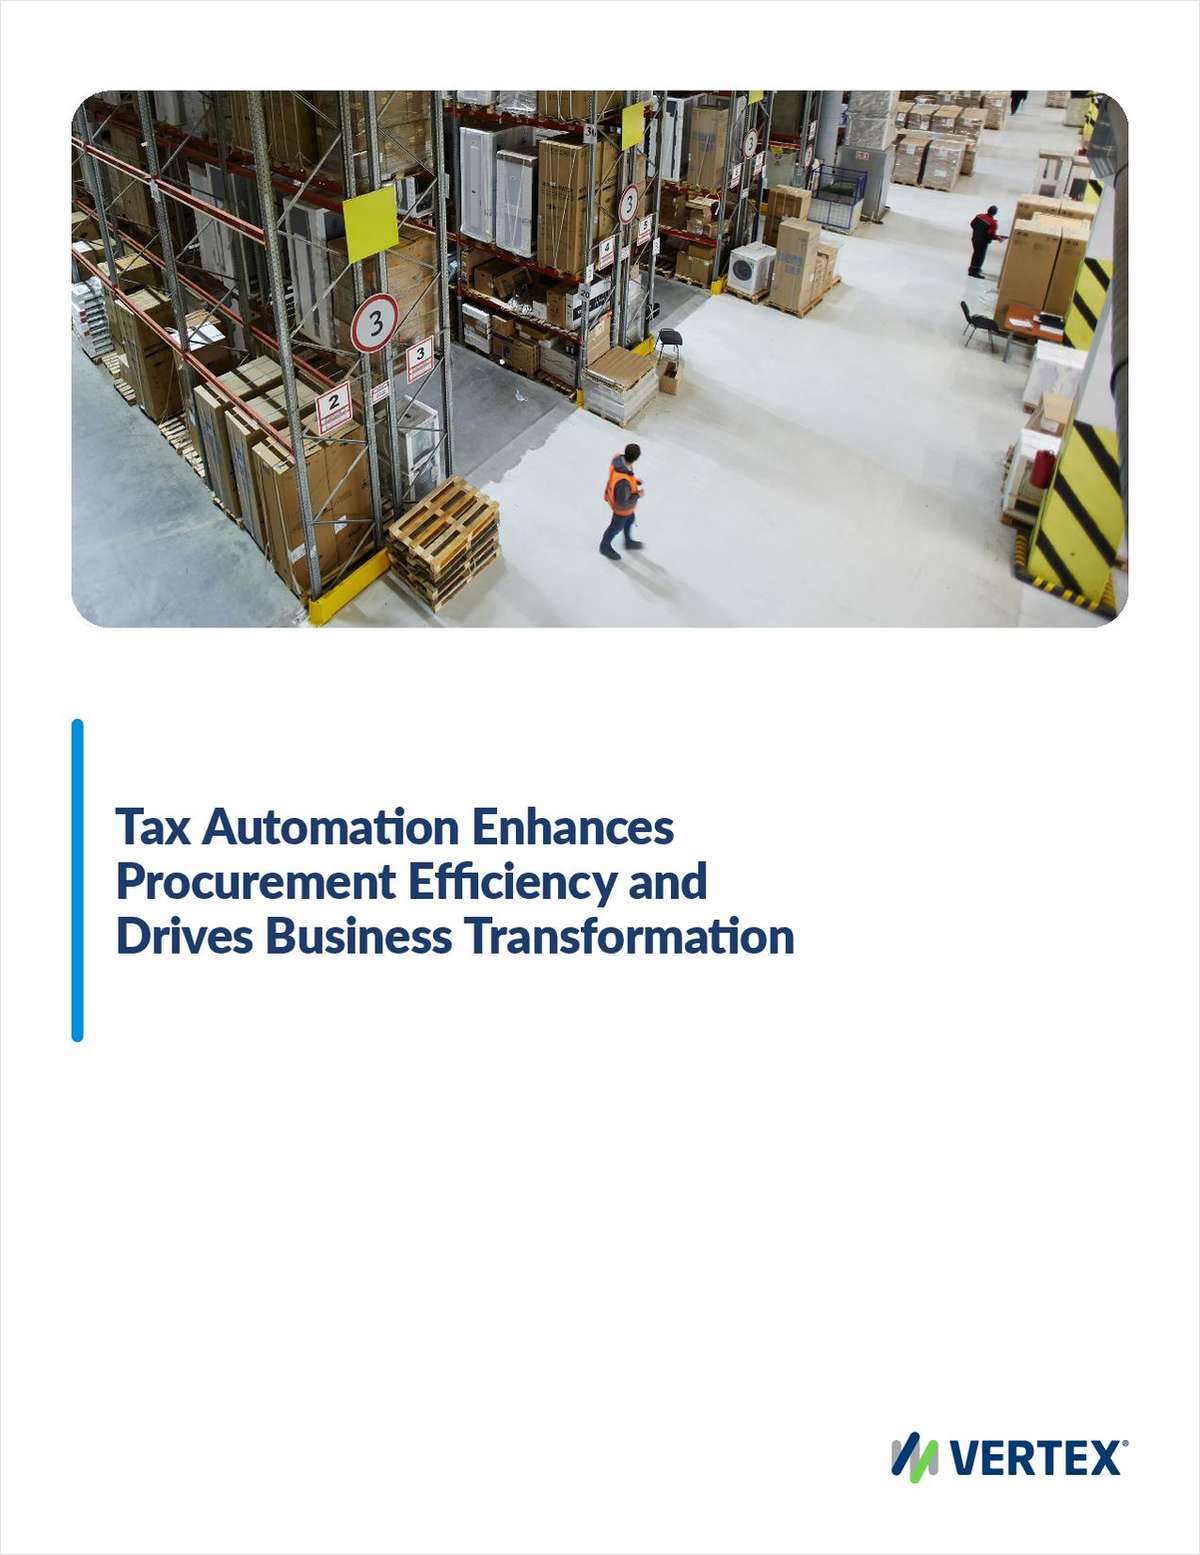 Tax Automation Enhances Procurement Efficiency and Drives Business Transformation